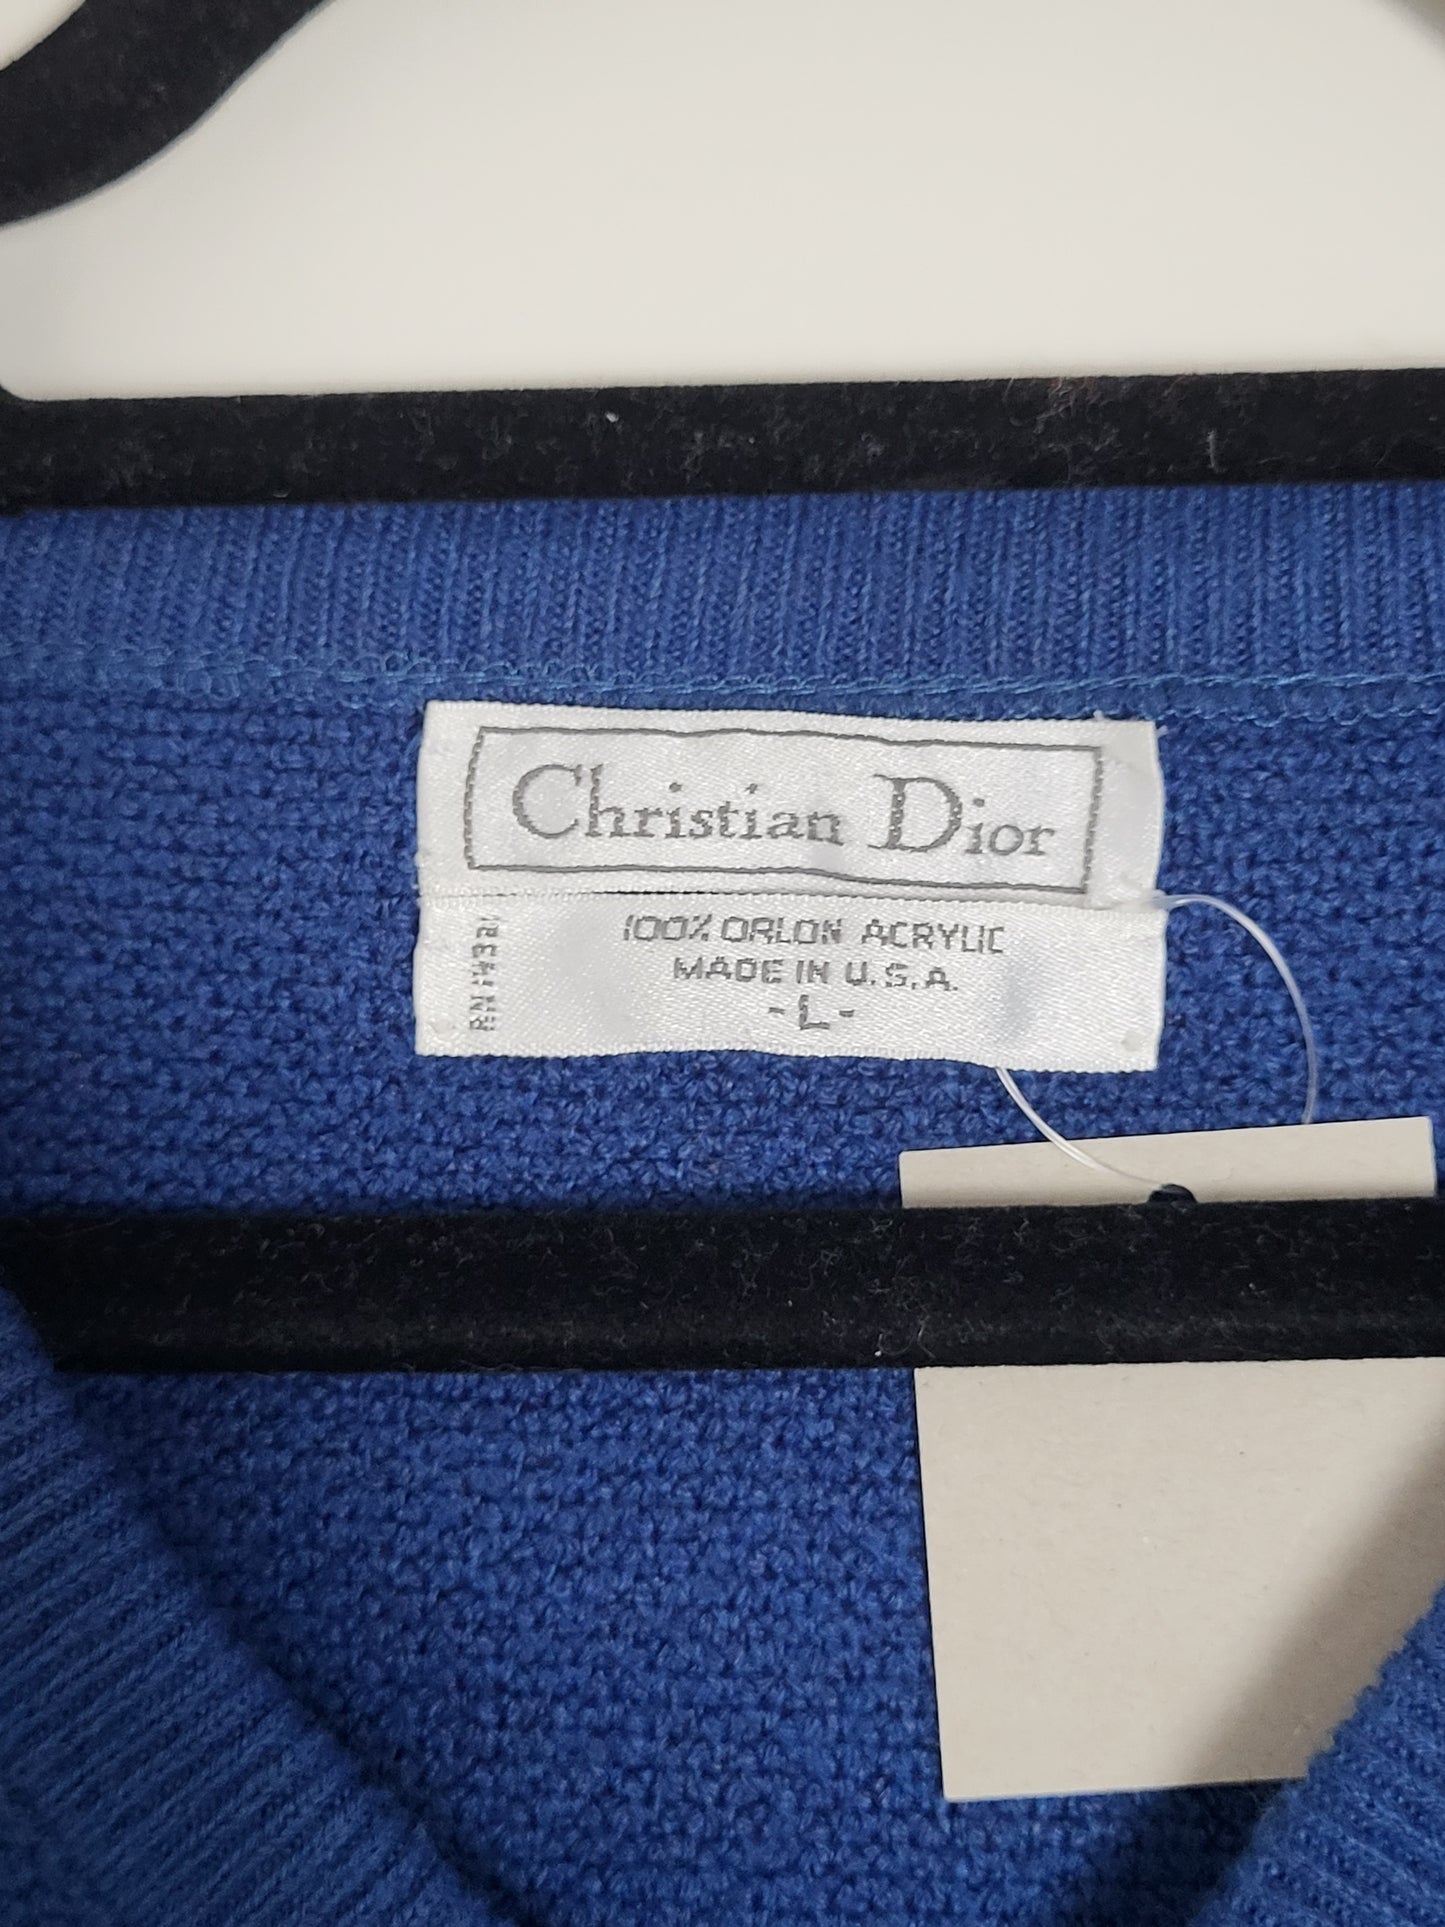 CHRISTIAN DIOR - Vintage Pullover - Klassisch - Blau - Herren - L